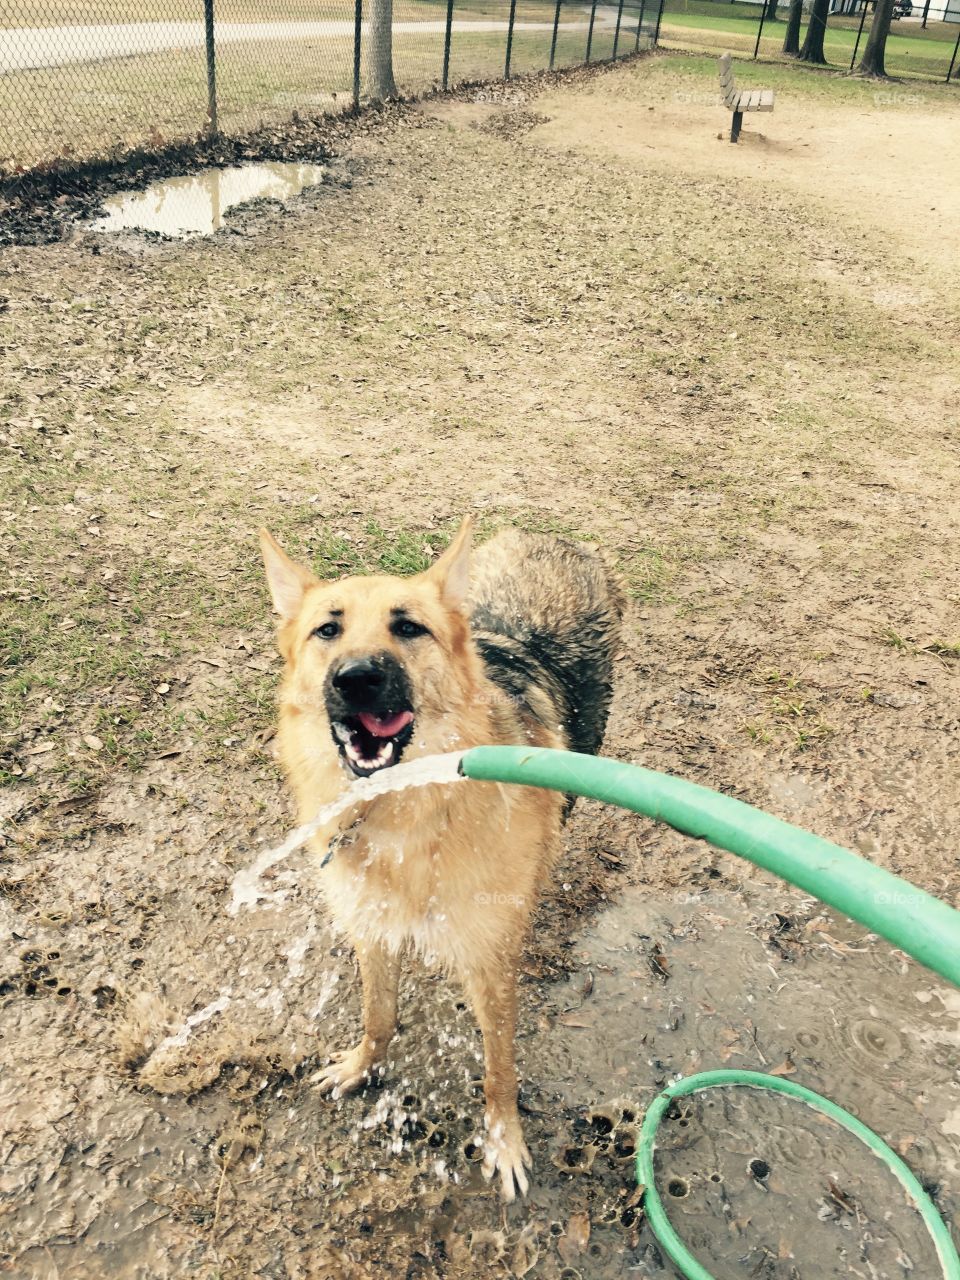 She's definitely a water dog!